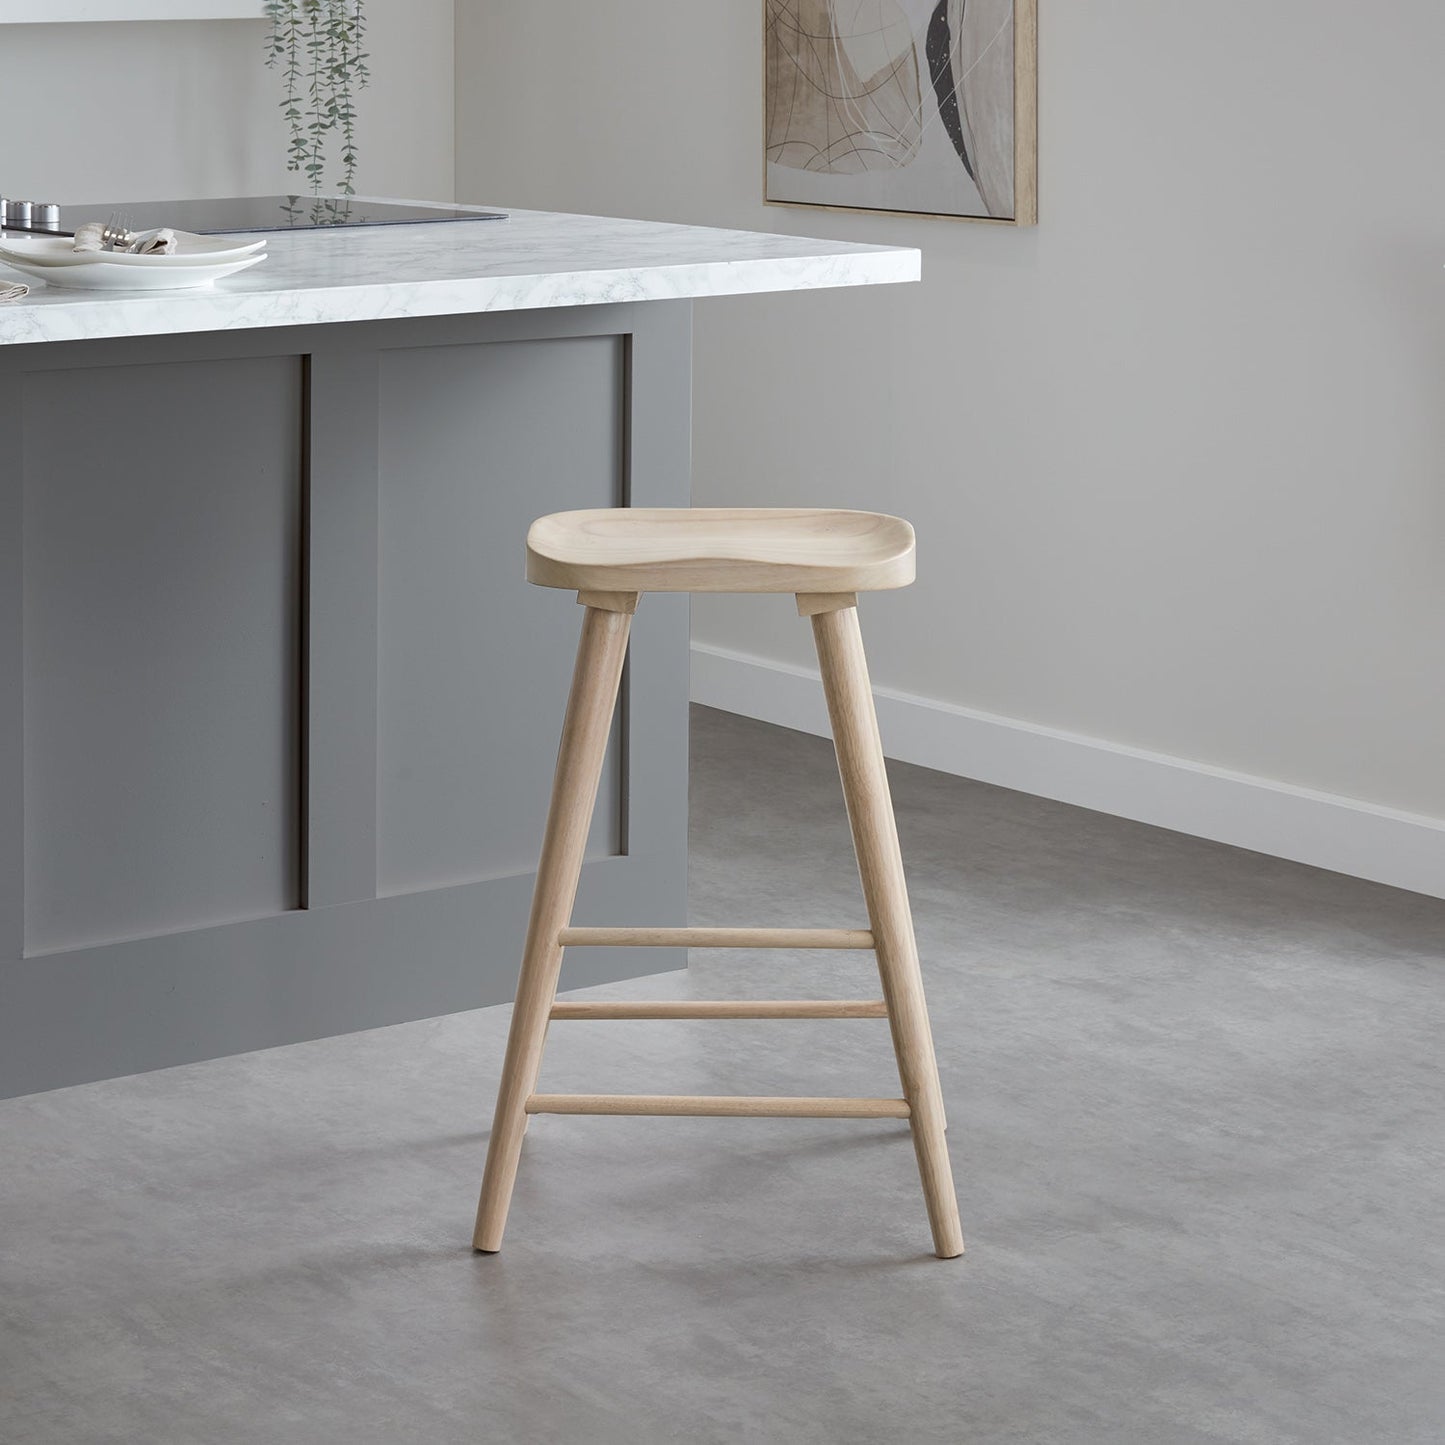 Silvester bar stool - whitewash finish - Laura James